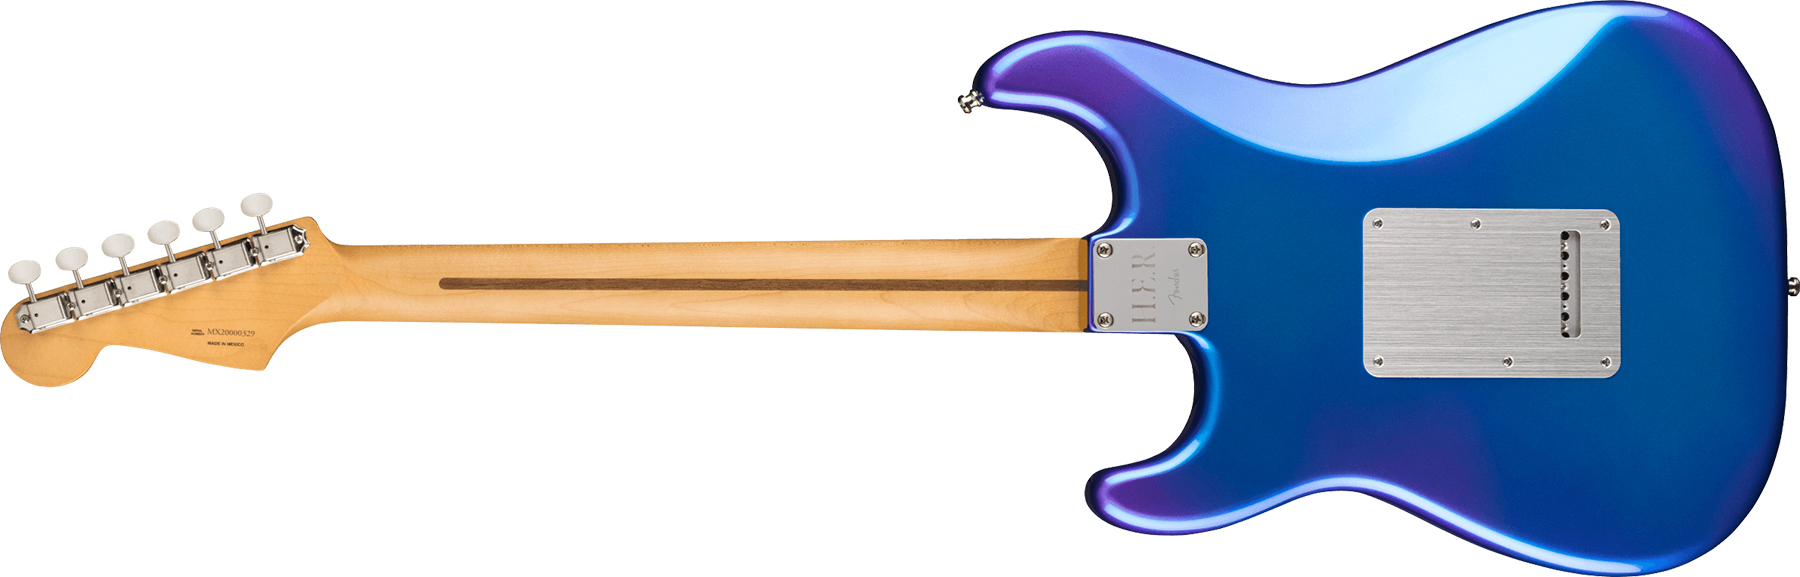 Fender H.e.r. Strat Ltd Signature Mex 3s Trem Mn - Blue Marlin - Guitarra eléctrica con forma de str. - Variation 1